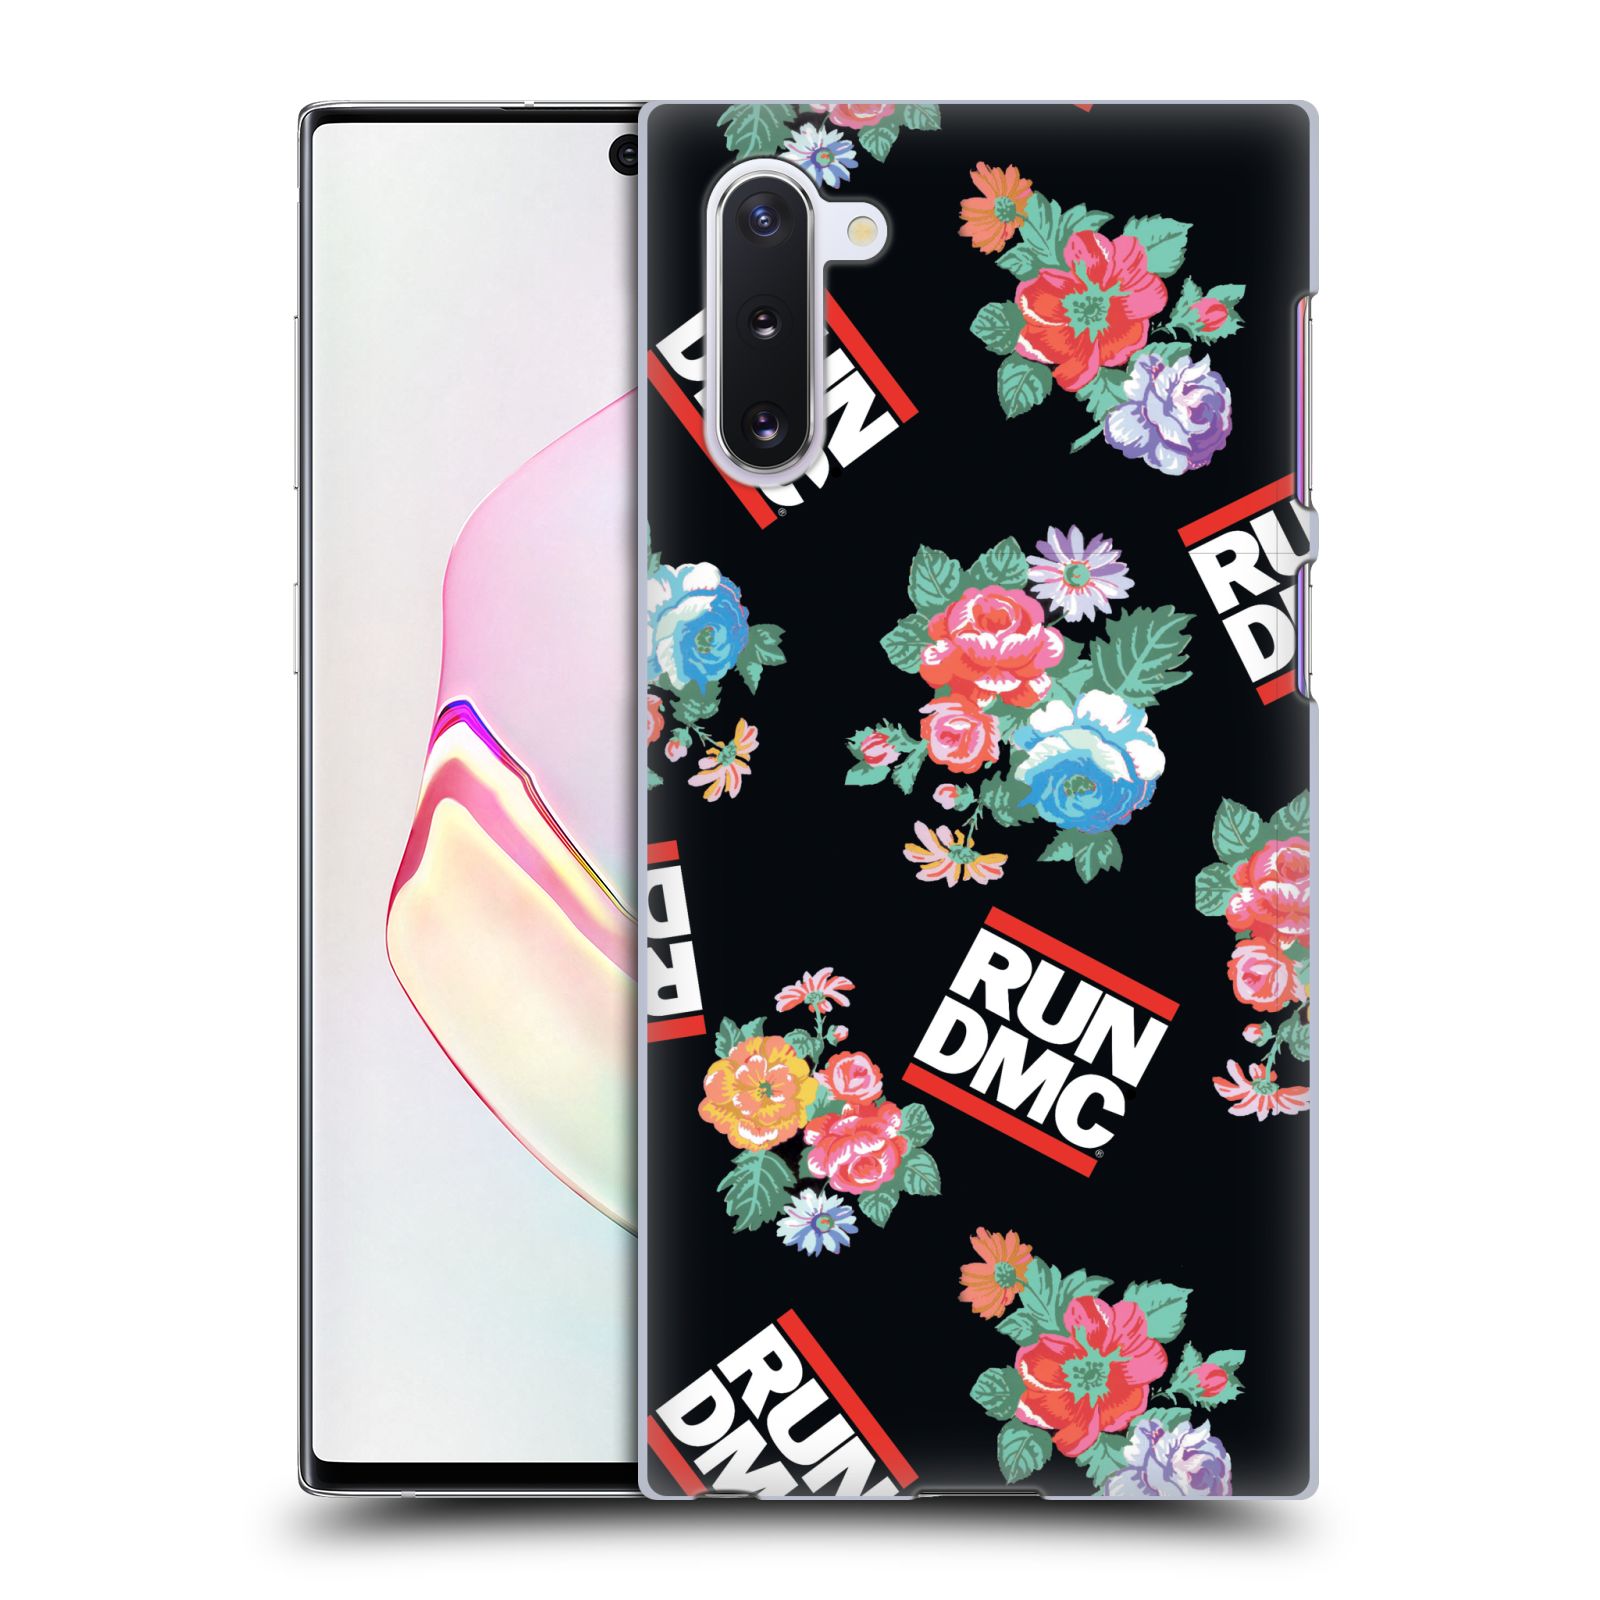 Pouzdro na mobil Samsung Galaxy Note 10 - HEAD CASE - rapová kapela Run DMC květiny černé pozadí